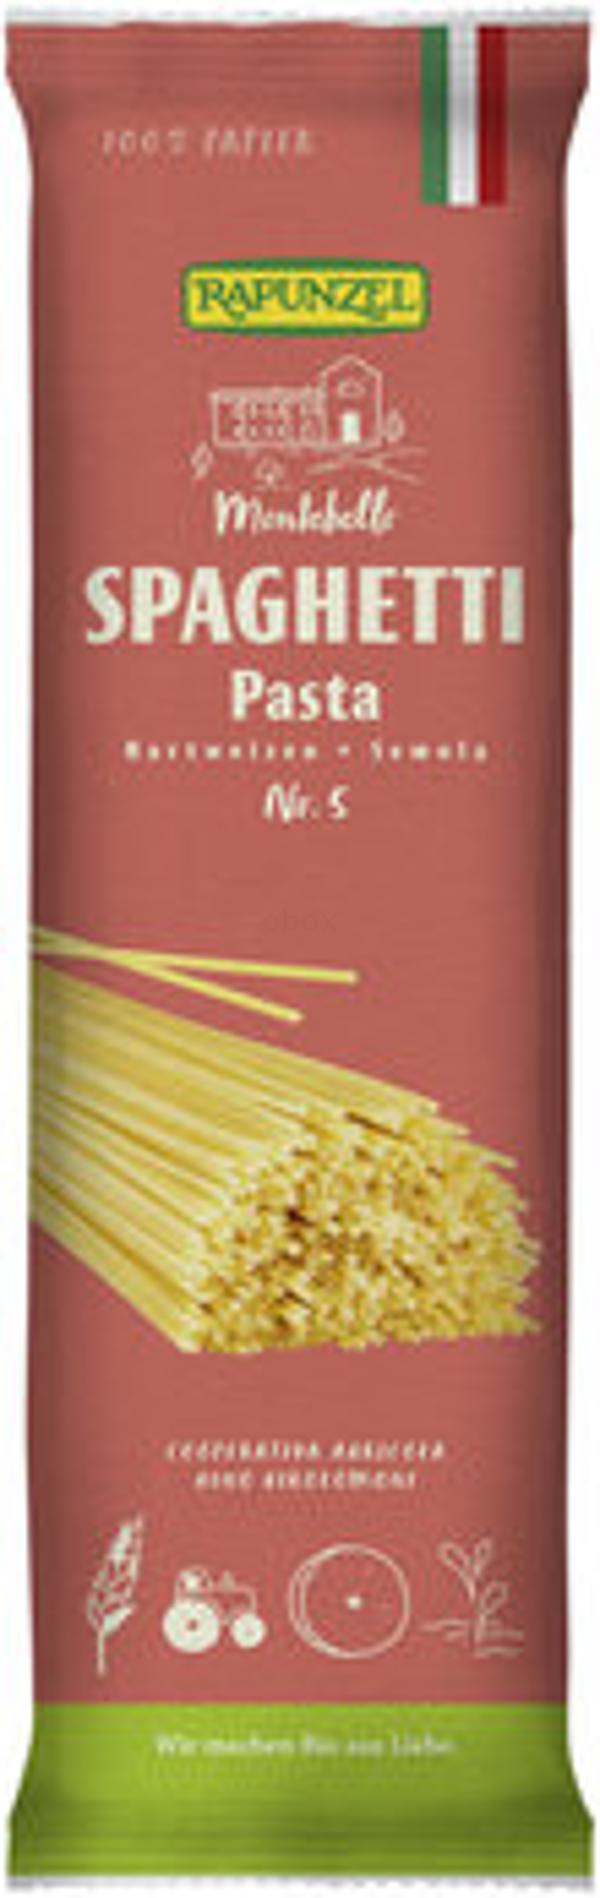 Produktfoto zu Spaghetti Semola No.5, 500 g